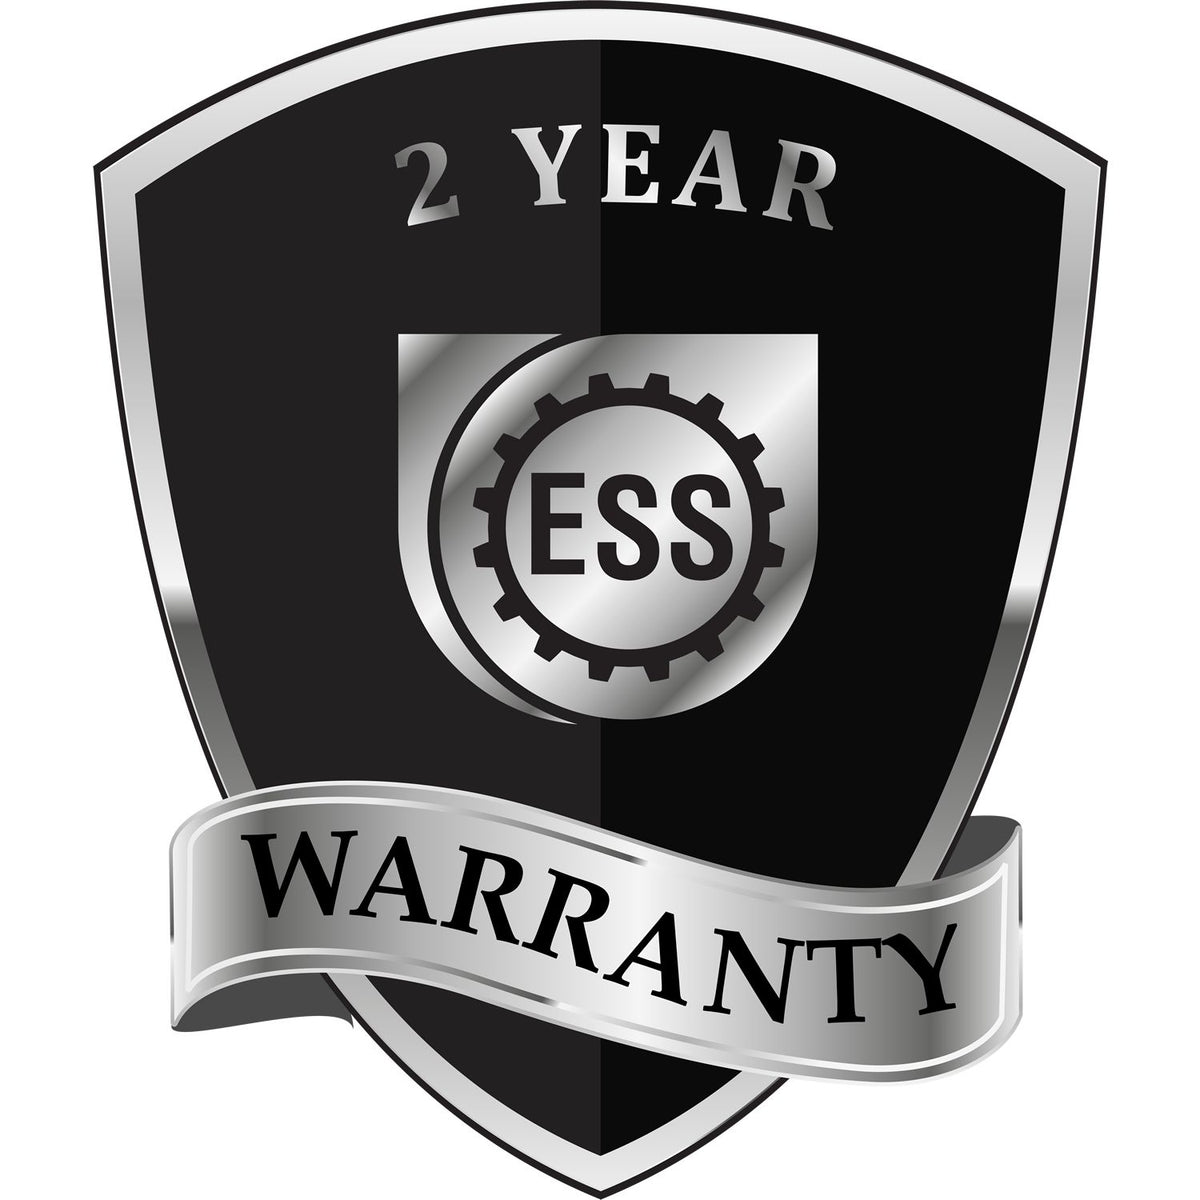 A black and silver badge or emblem showing warranty information for the Utah Geologist Desk Seal